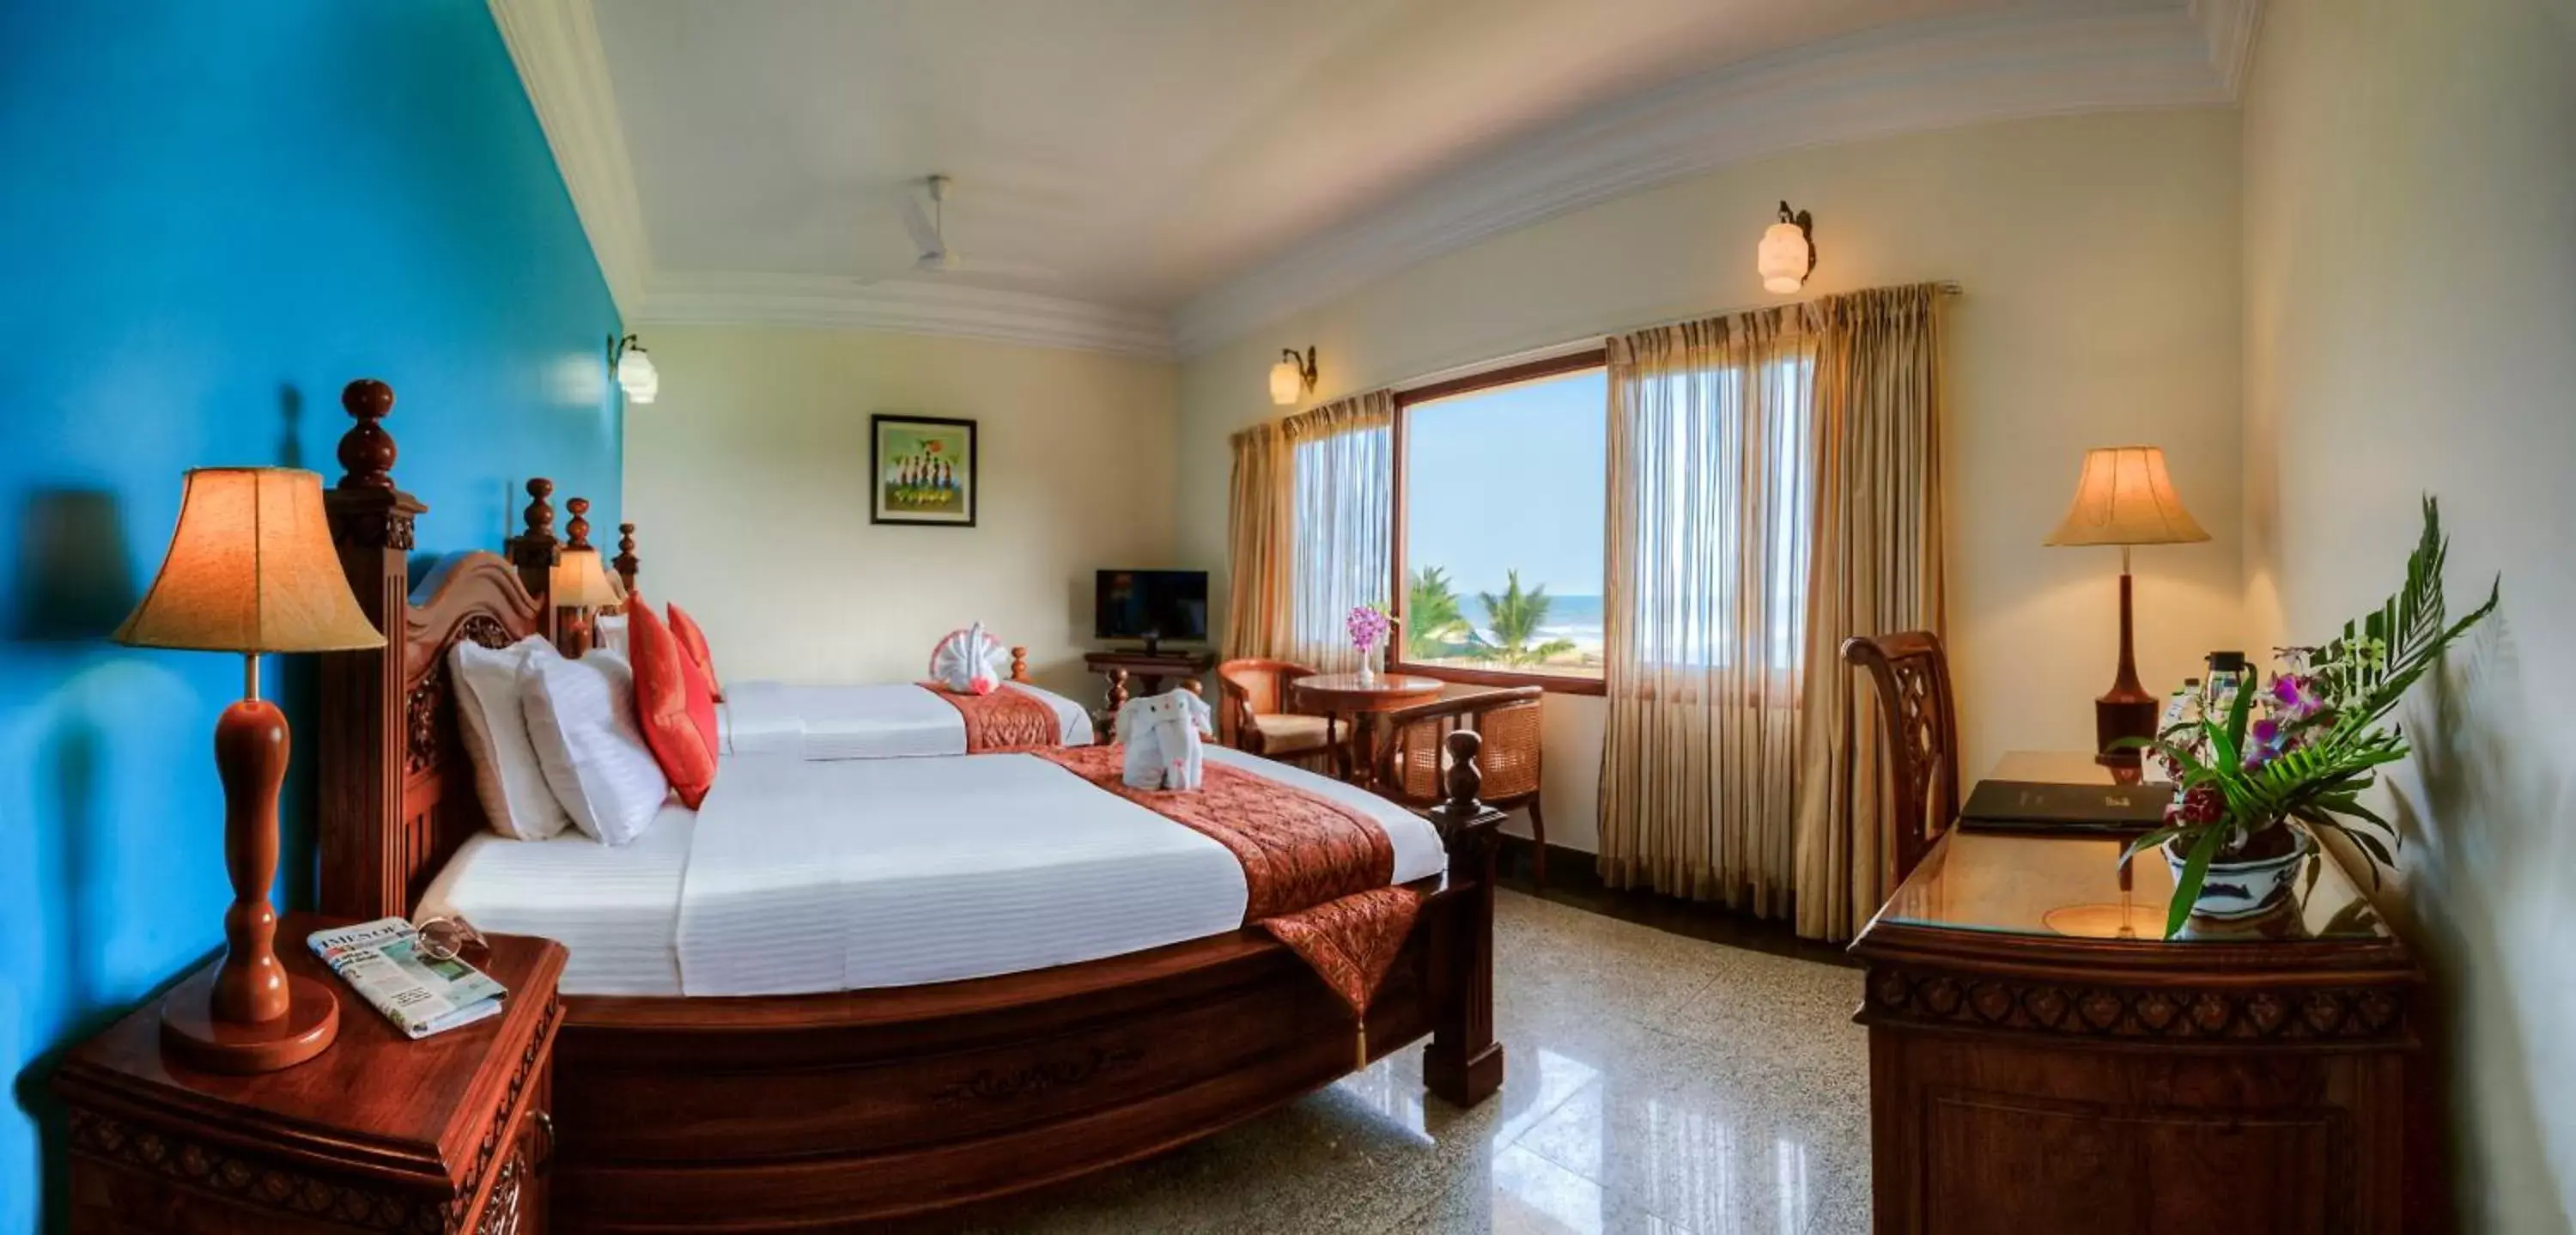 Shower, Room Photo in Ideal Beach Resort